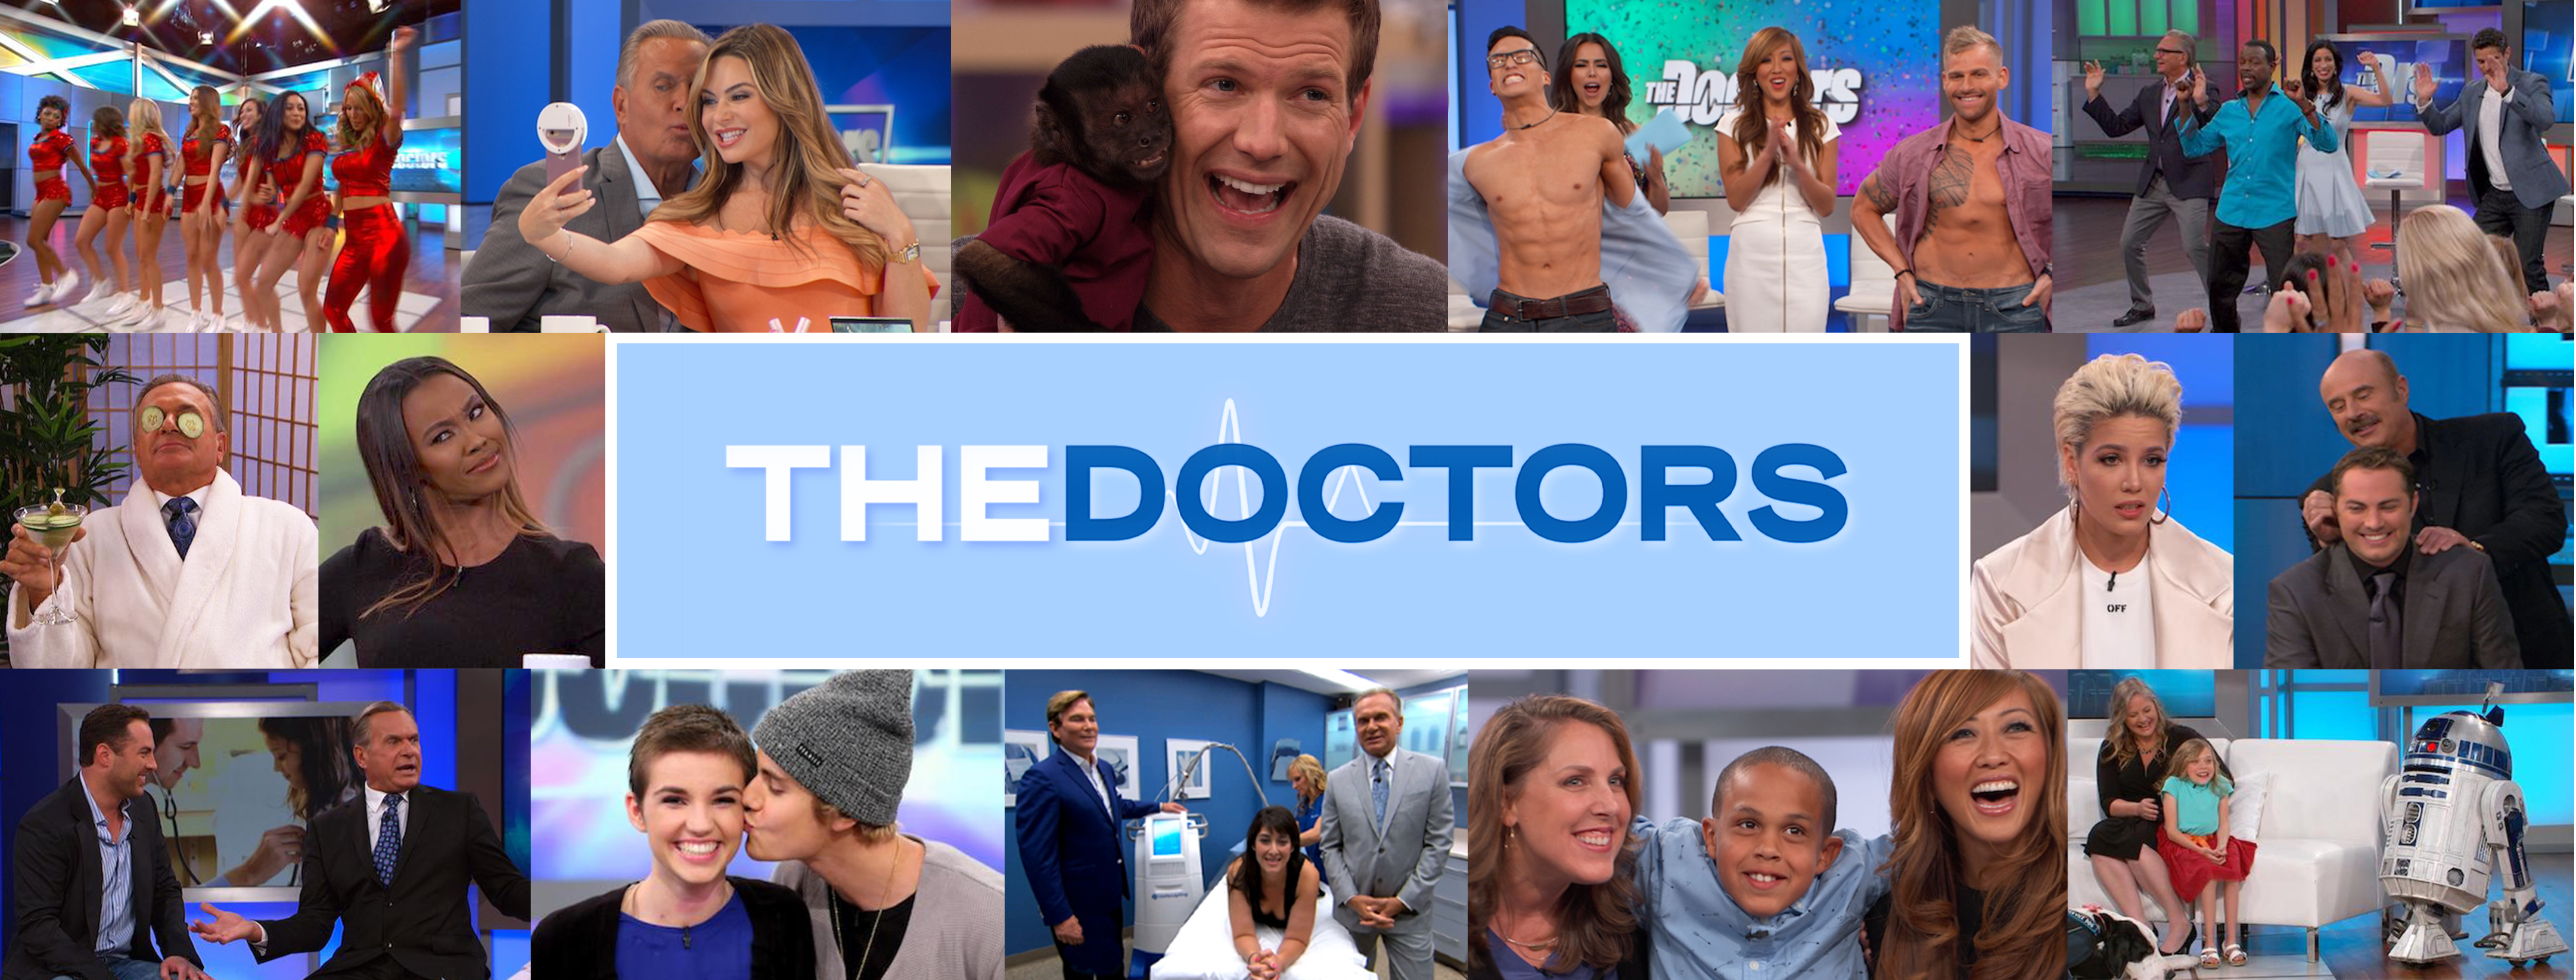 Don’t Let Your Private Parts Fail! | The Doctors TV Show